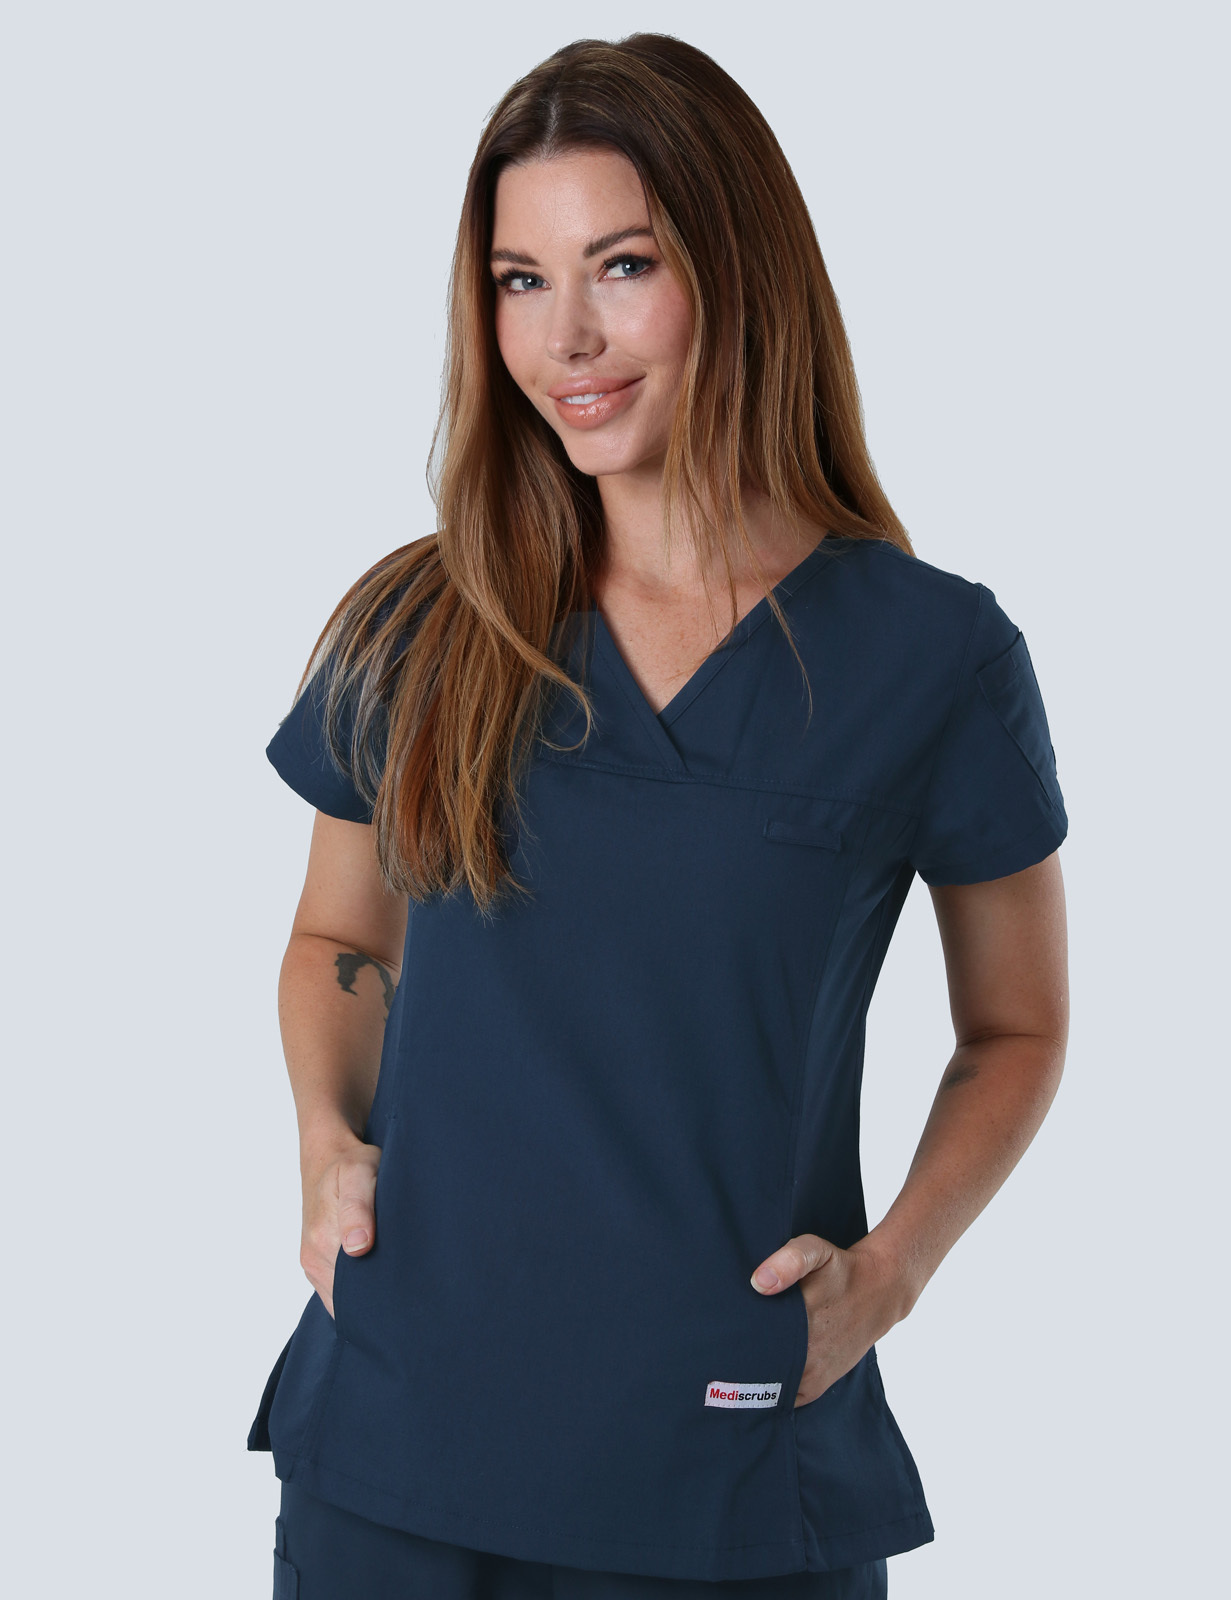 Monash Health Newborn Nurse Uniform Set Bundle (Women's Fit Solid Top and Cargo Pants in Navy + Logo)